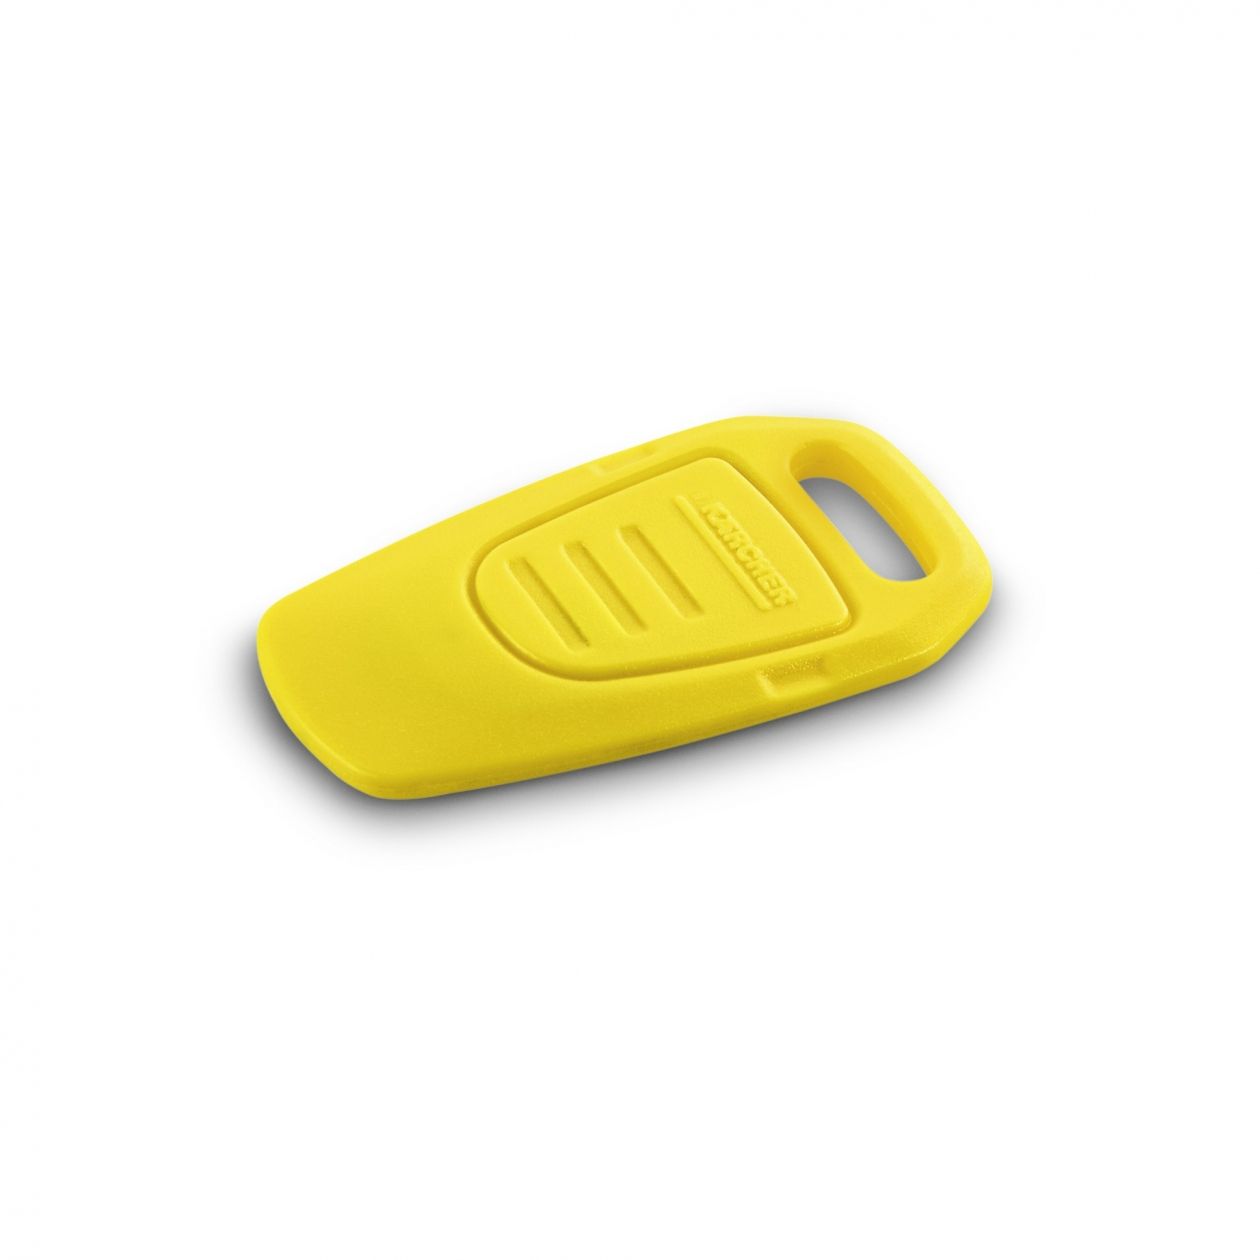 Ключ для системы KIK Karcher, желтый